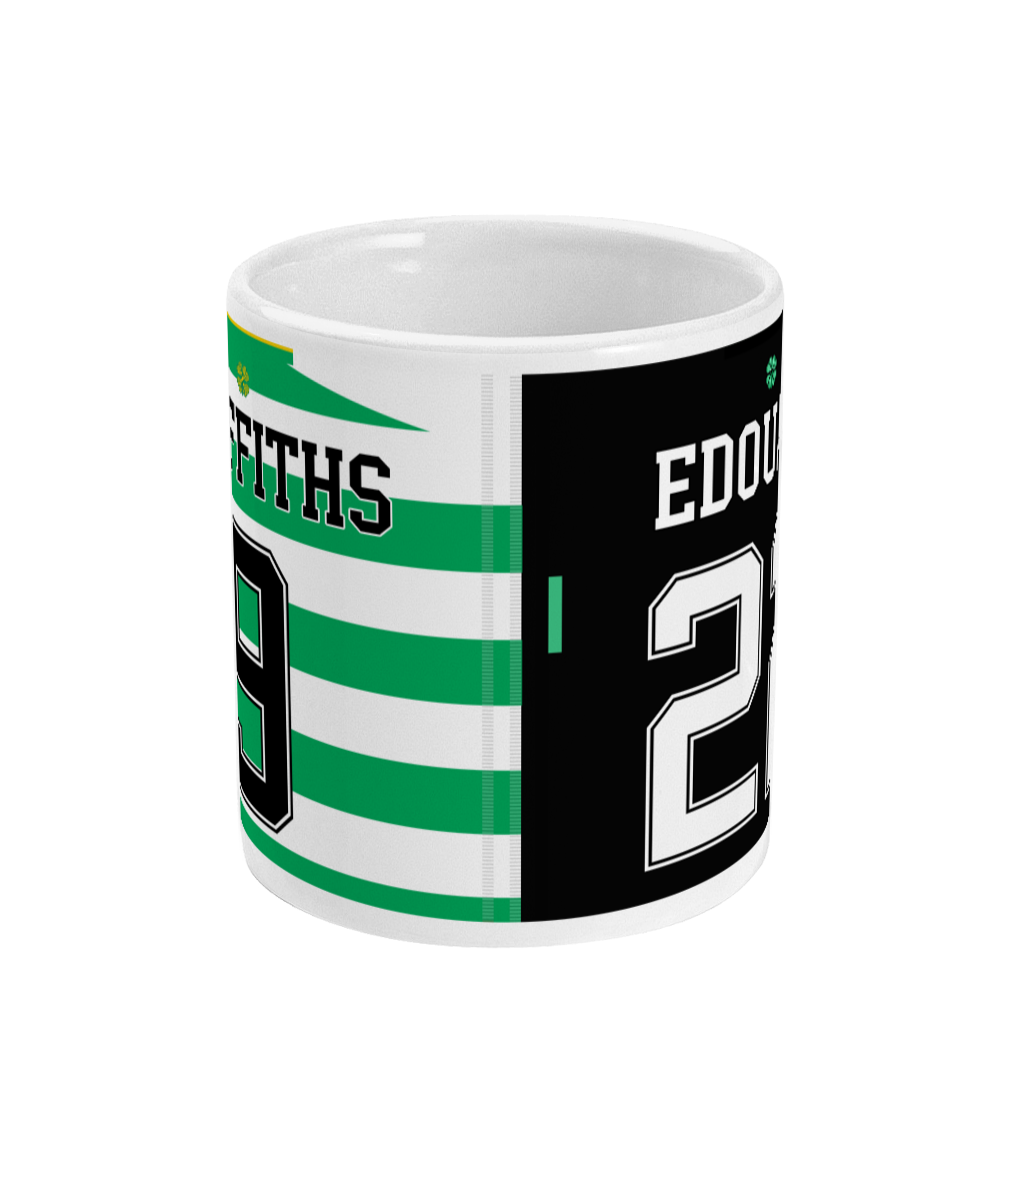 Celtic - Personalised 2020/21 Home/Away Mug